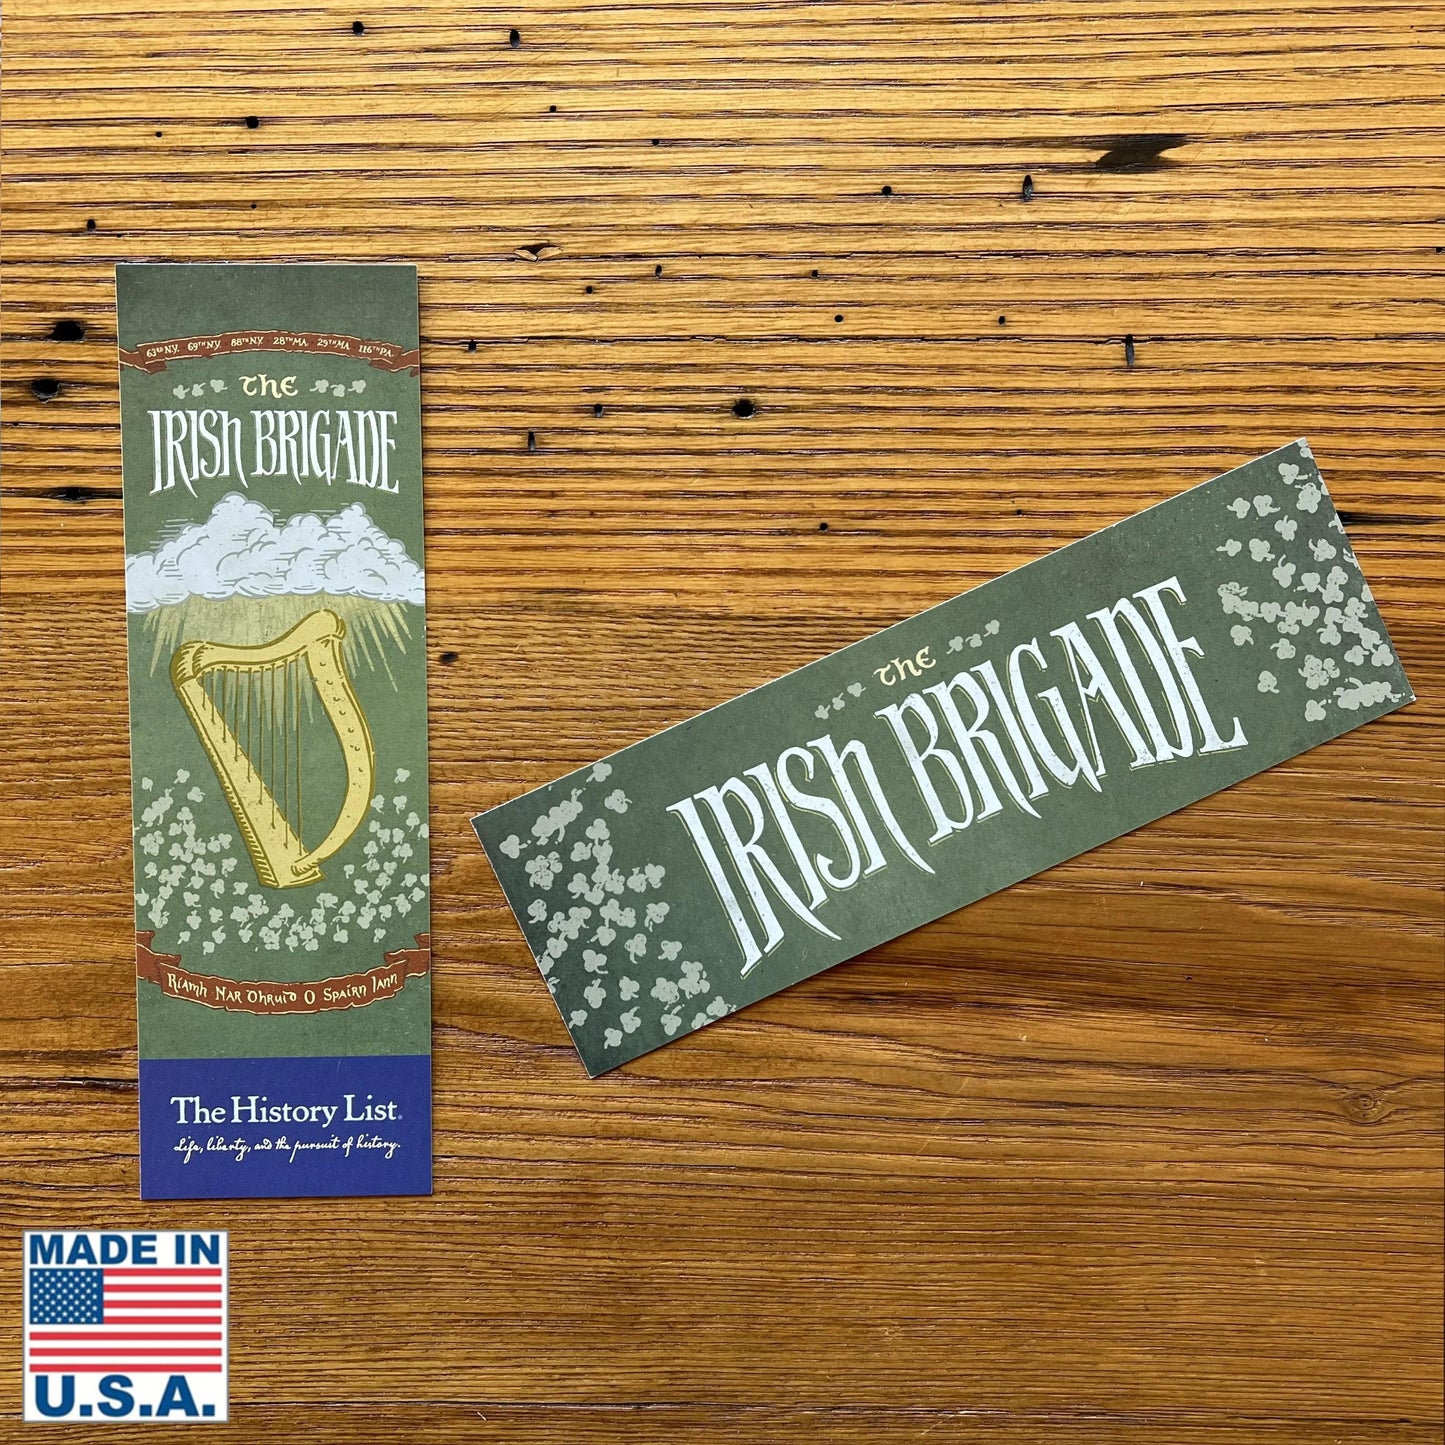 The Civil War "Irish Brigade" Bookmark